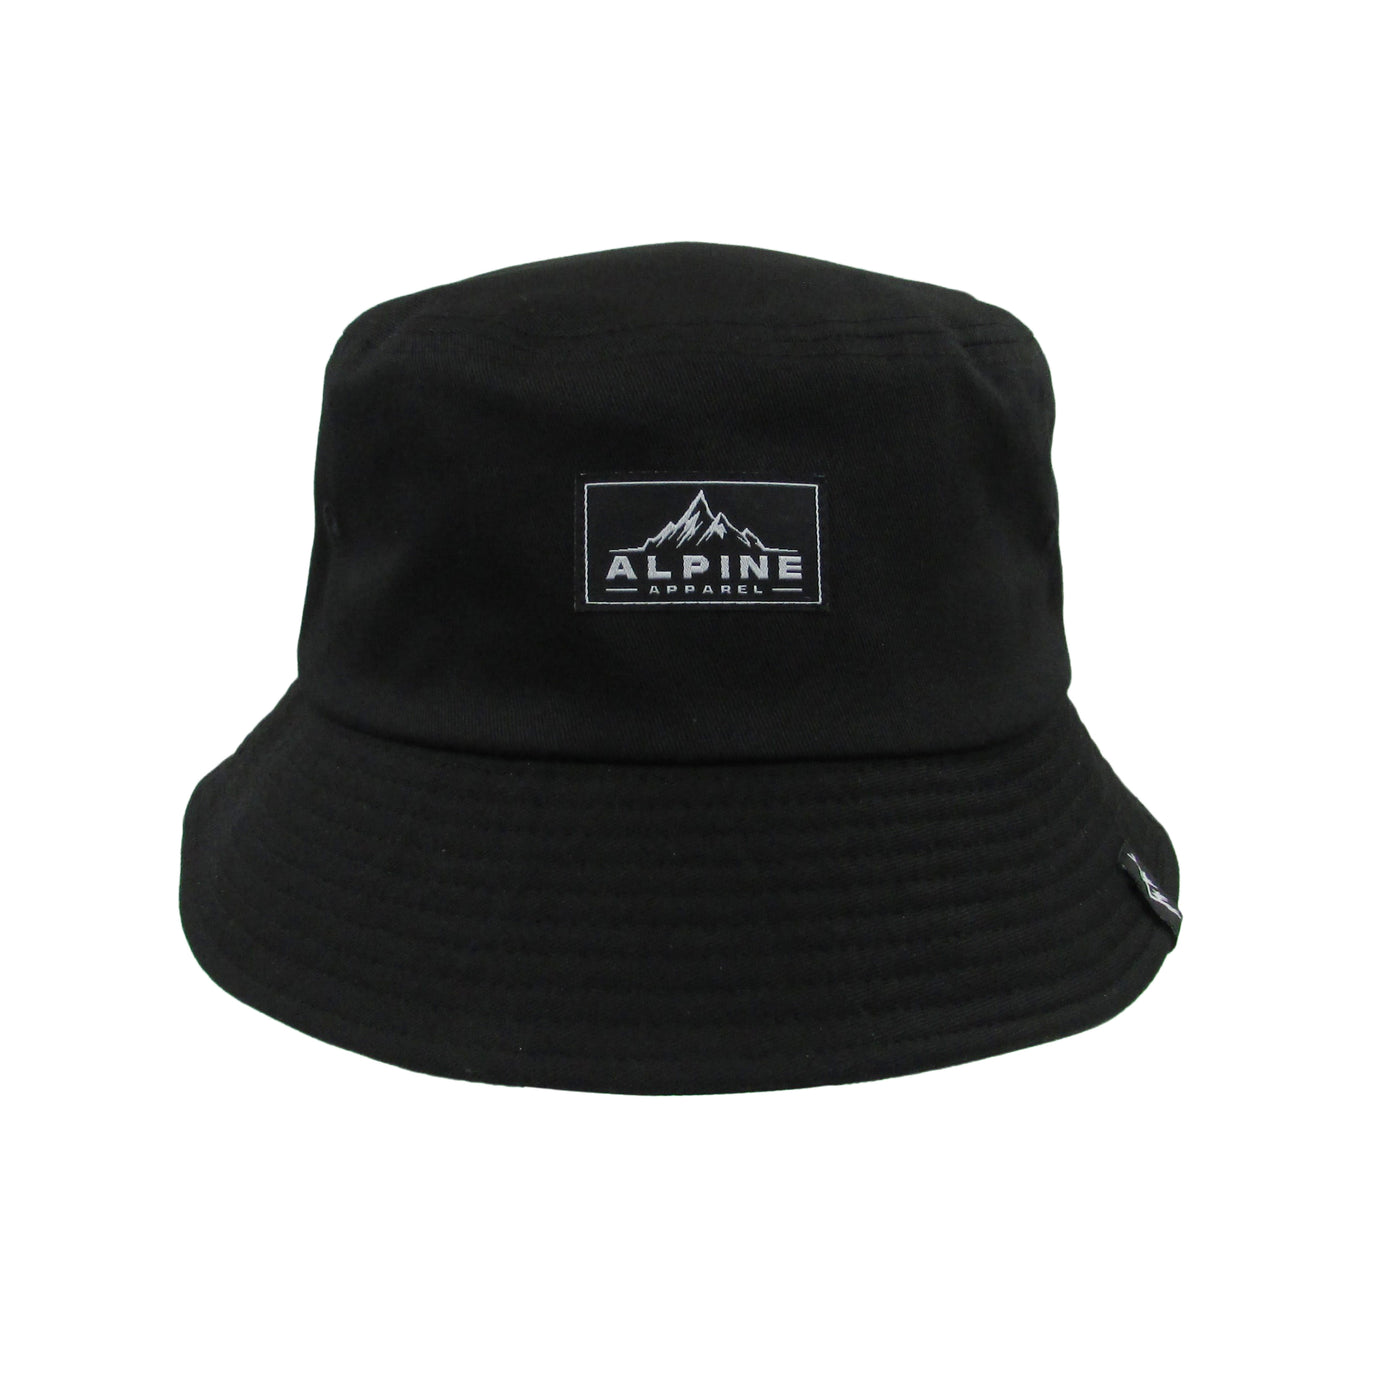 Alpine Apparel Black Bucket Hat - Front